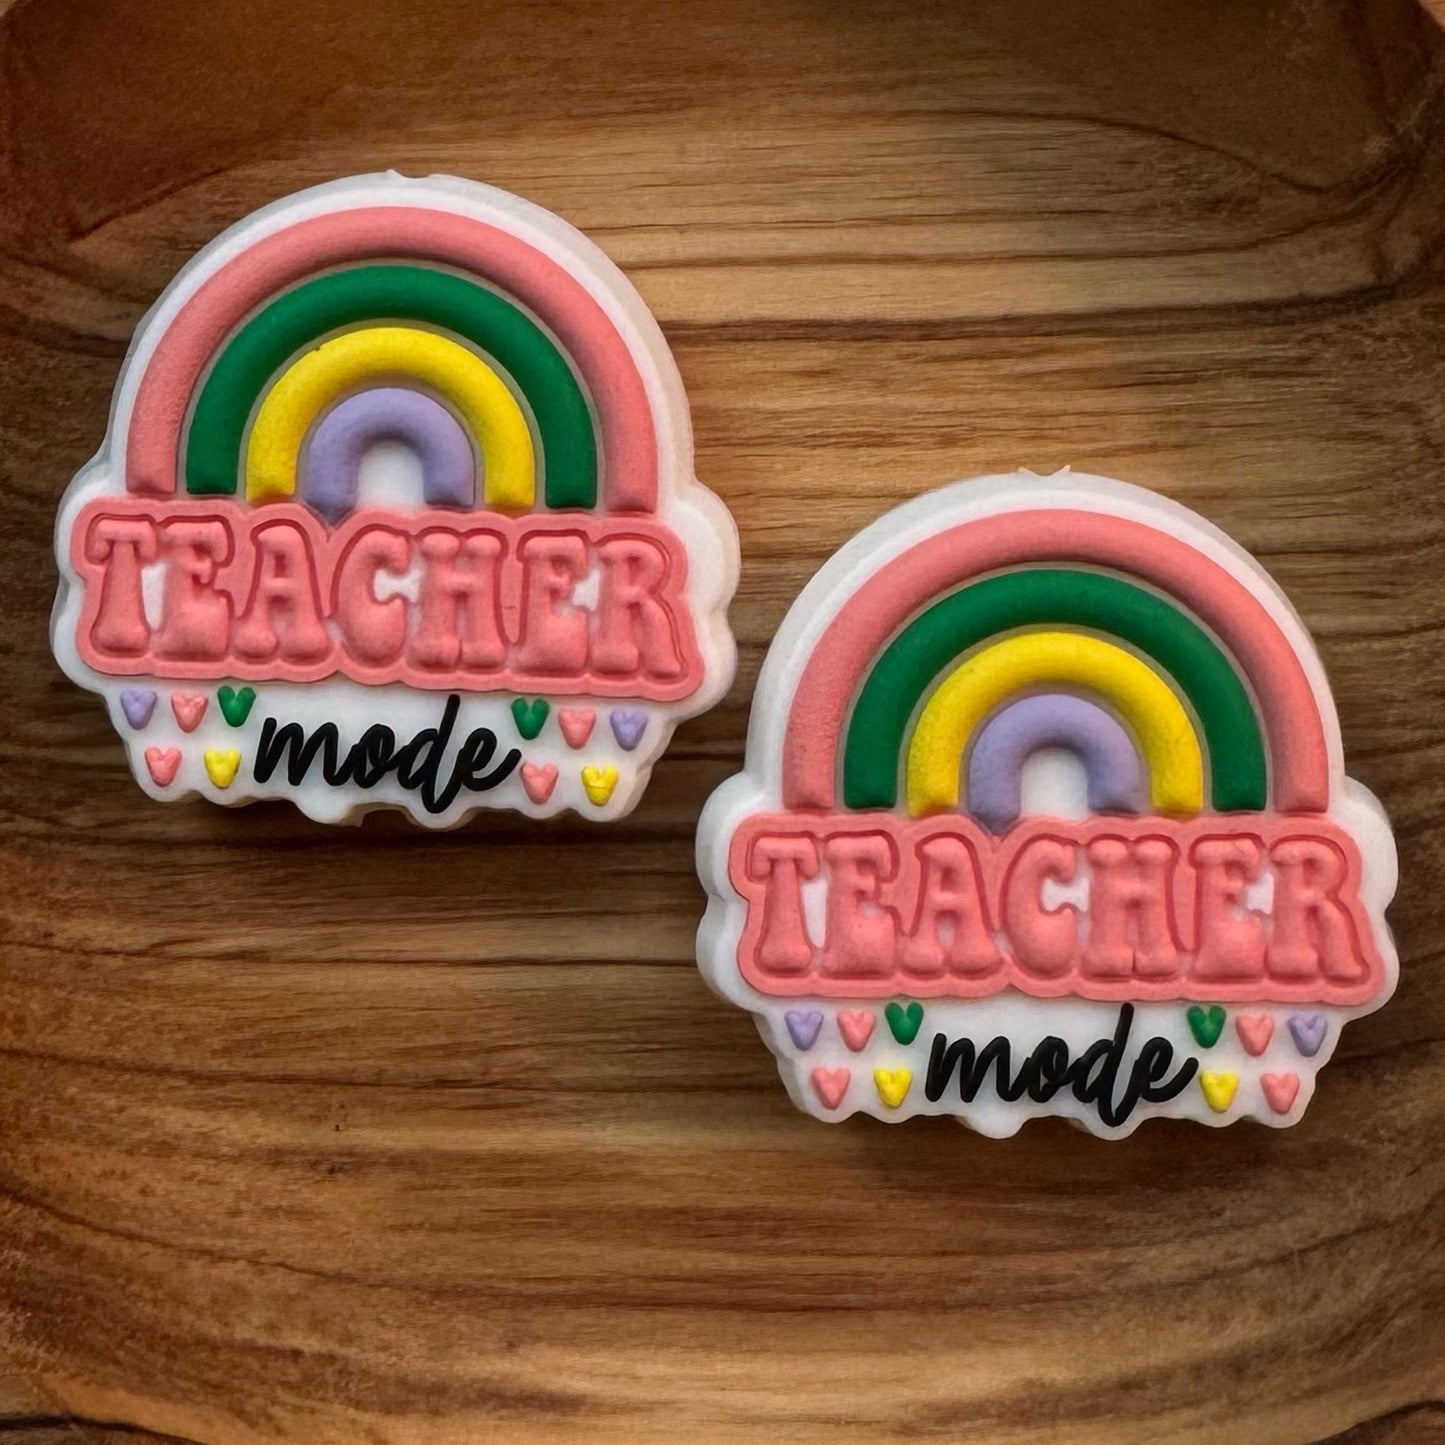 Teacher Mode Rainbow Focal